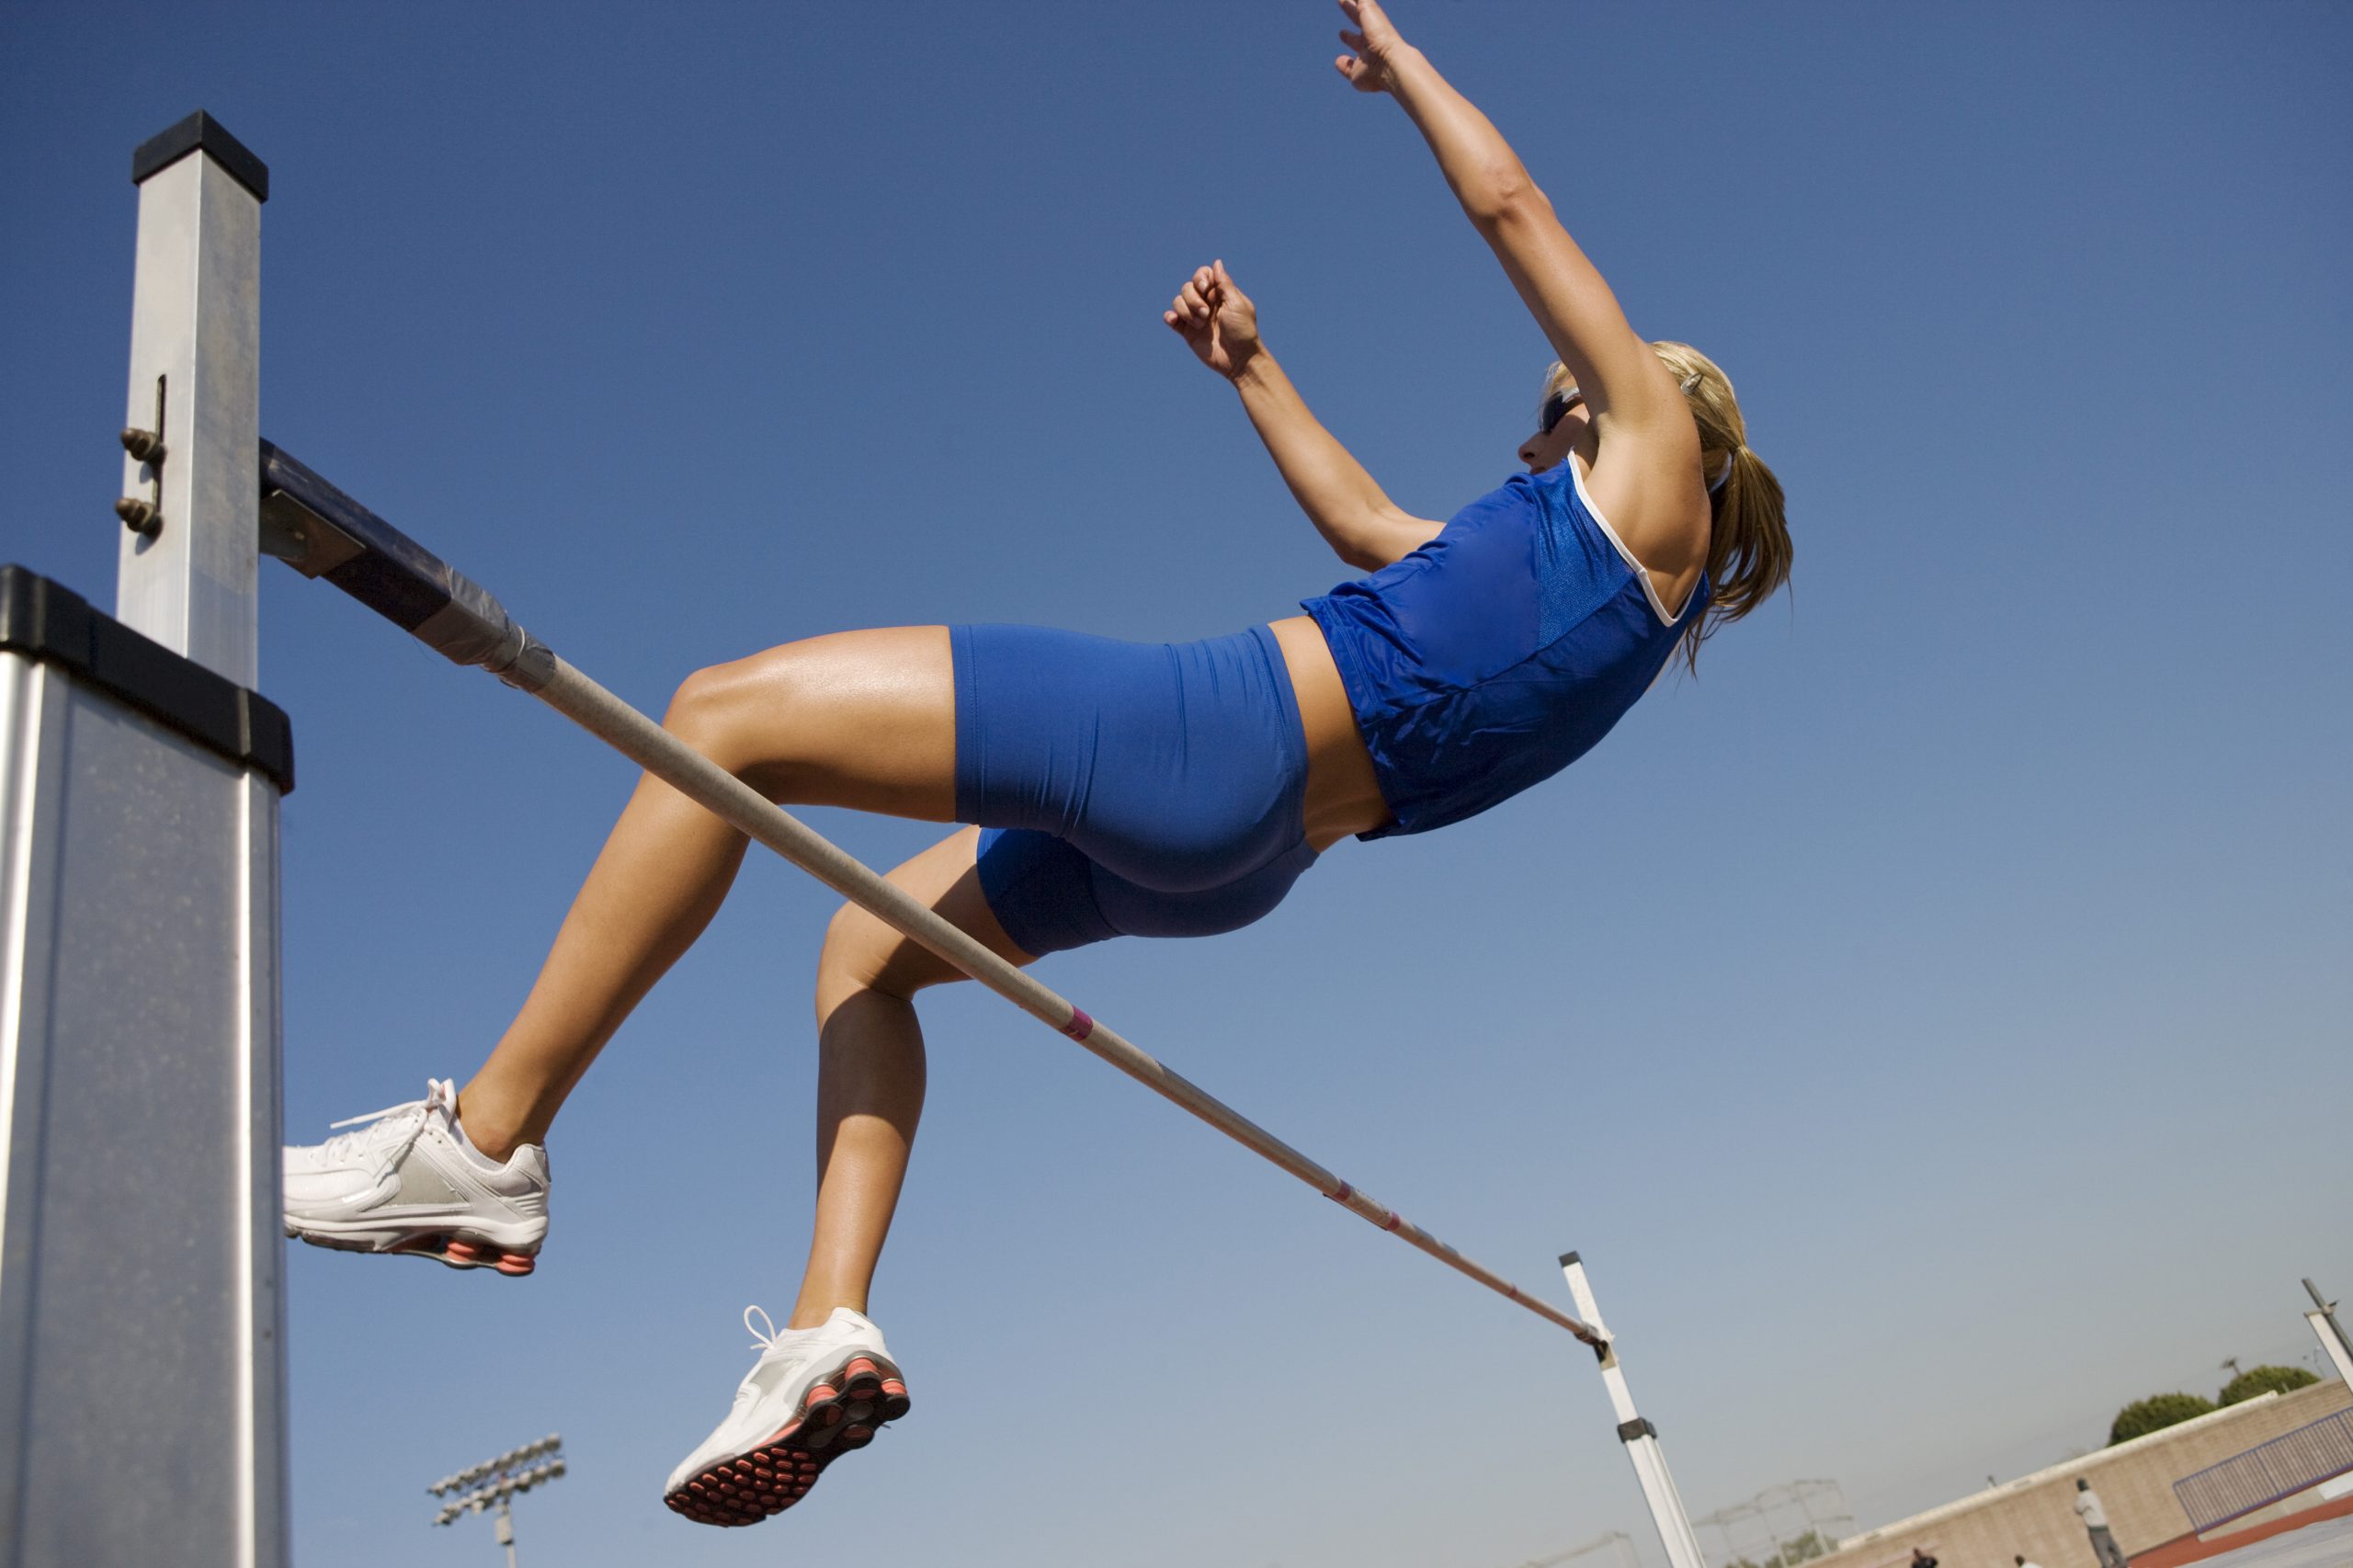 patent bar - https://depositphotos.com/21785175/stock-photo-athlete-performing-high-jump.html